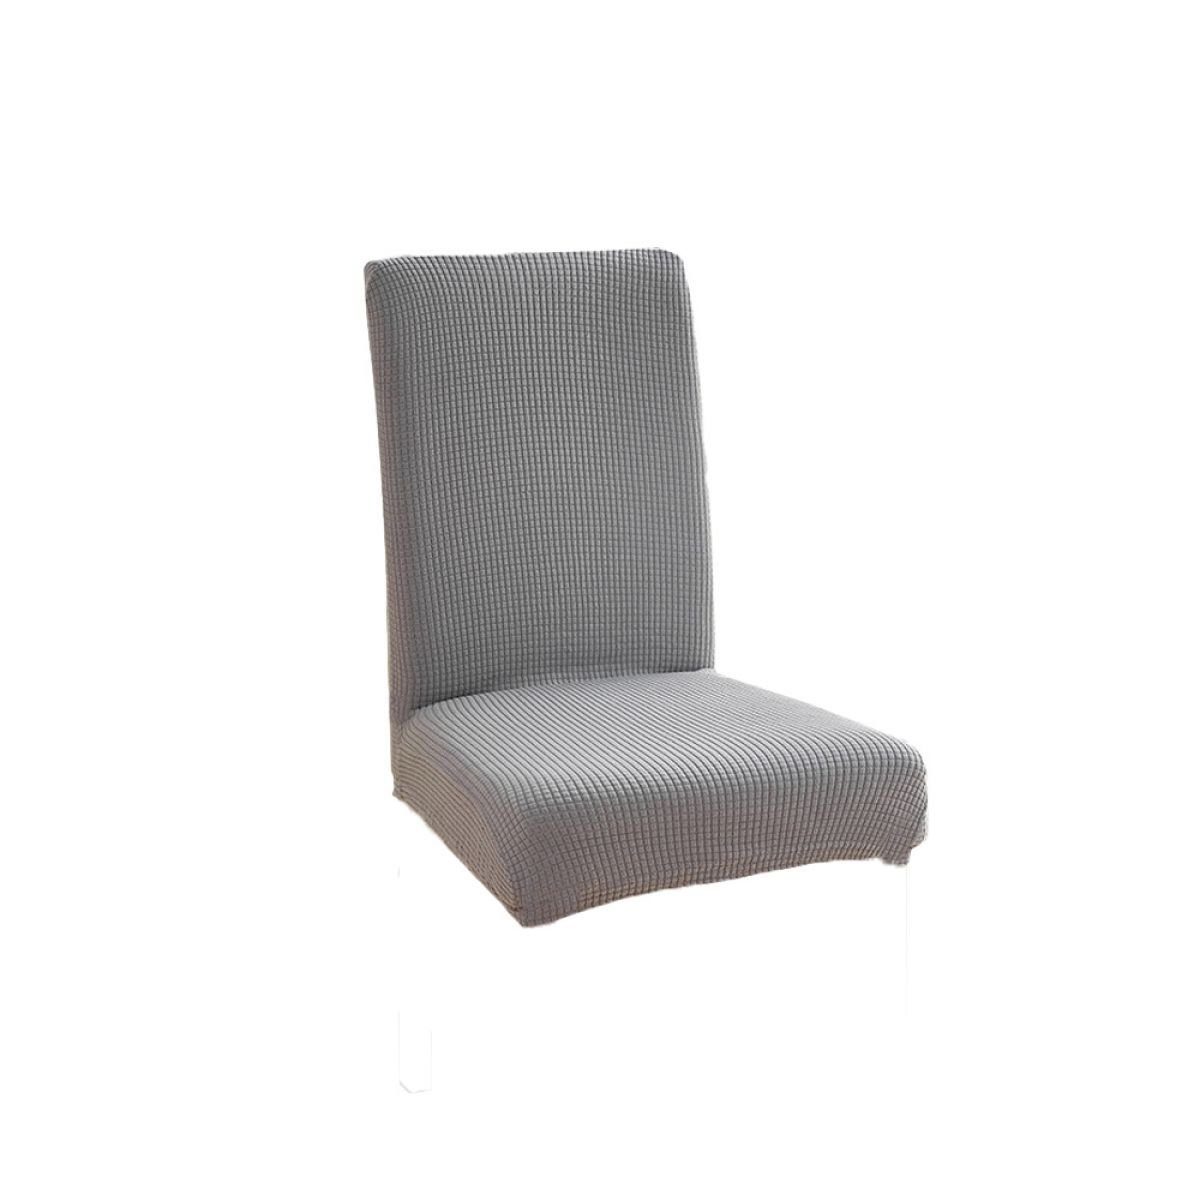 Stuhlbezug Stretch Abnehmbare Waschbar Stuhlbezug für Esszimmerstühle, Juoungle grau